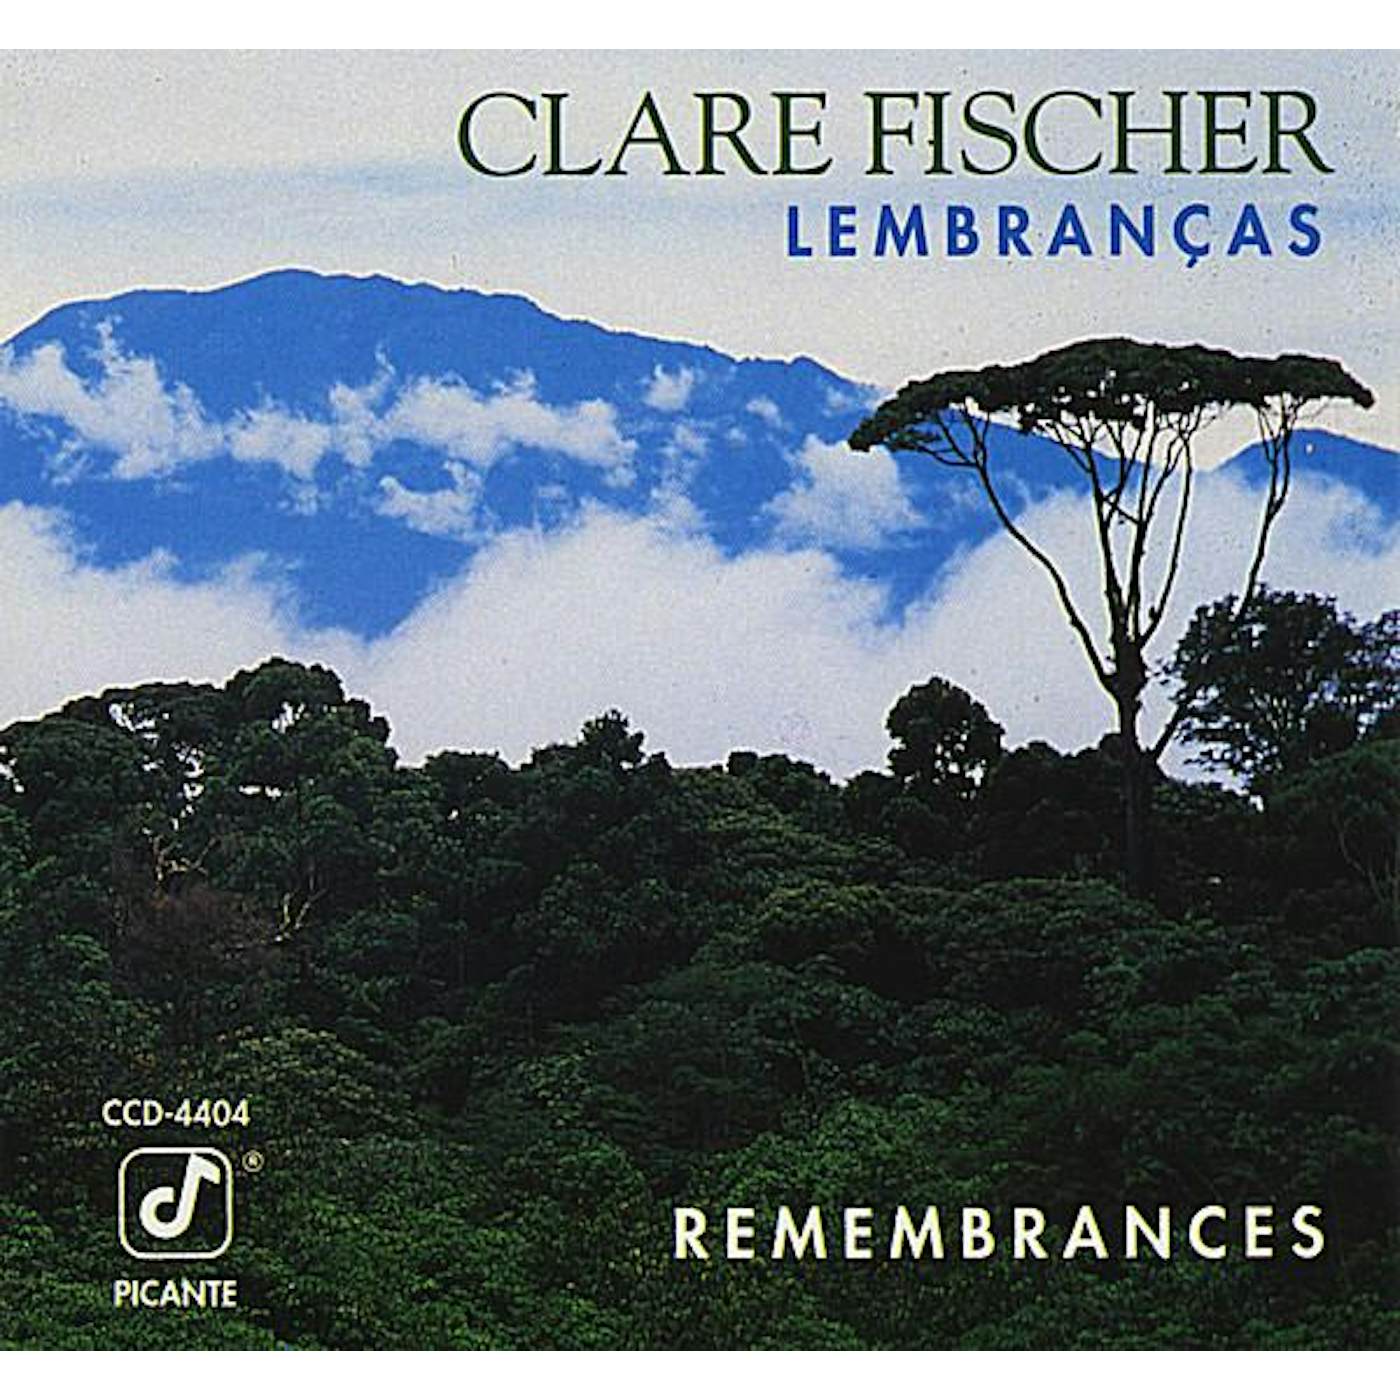 Clare Fischer LEMBRANCAS CD